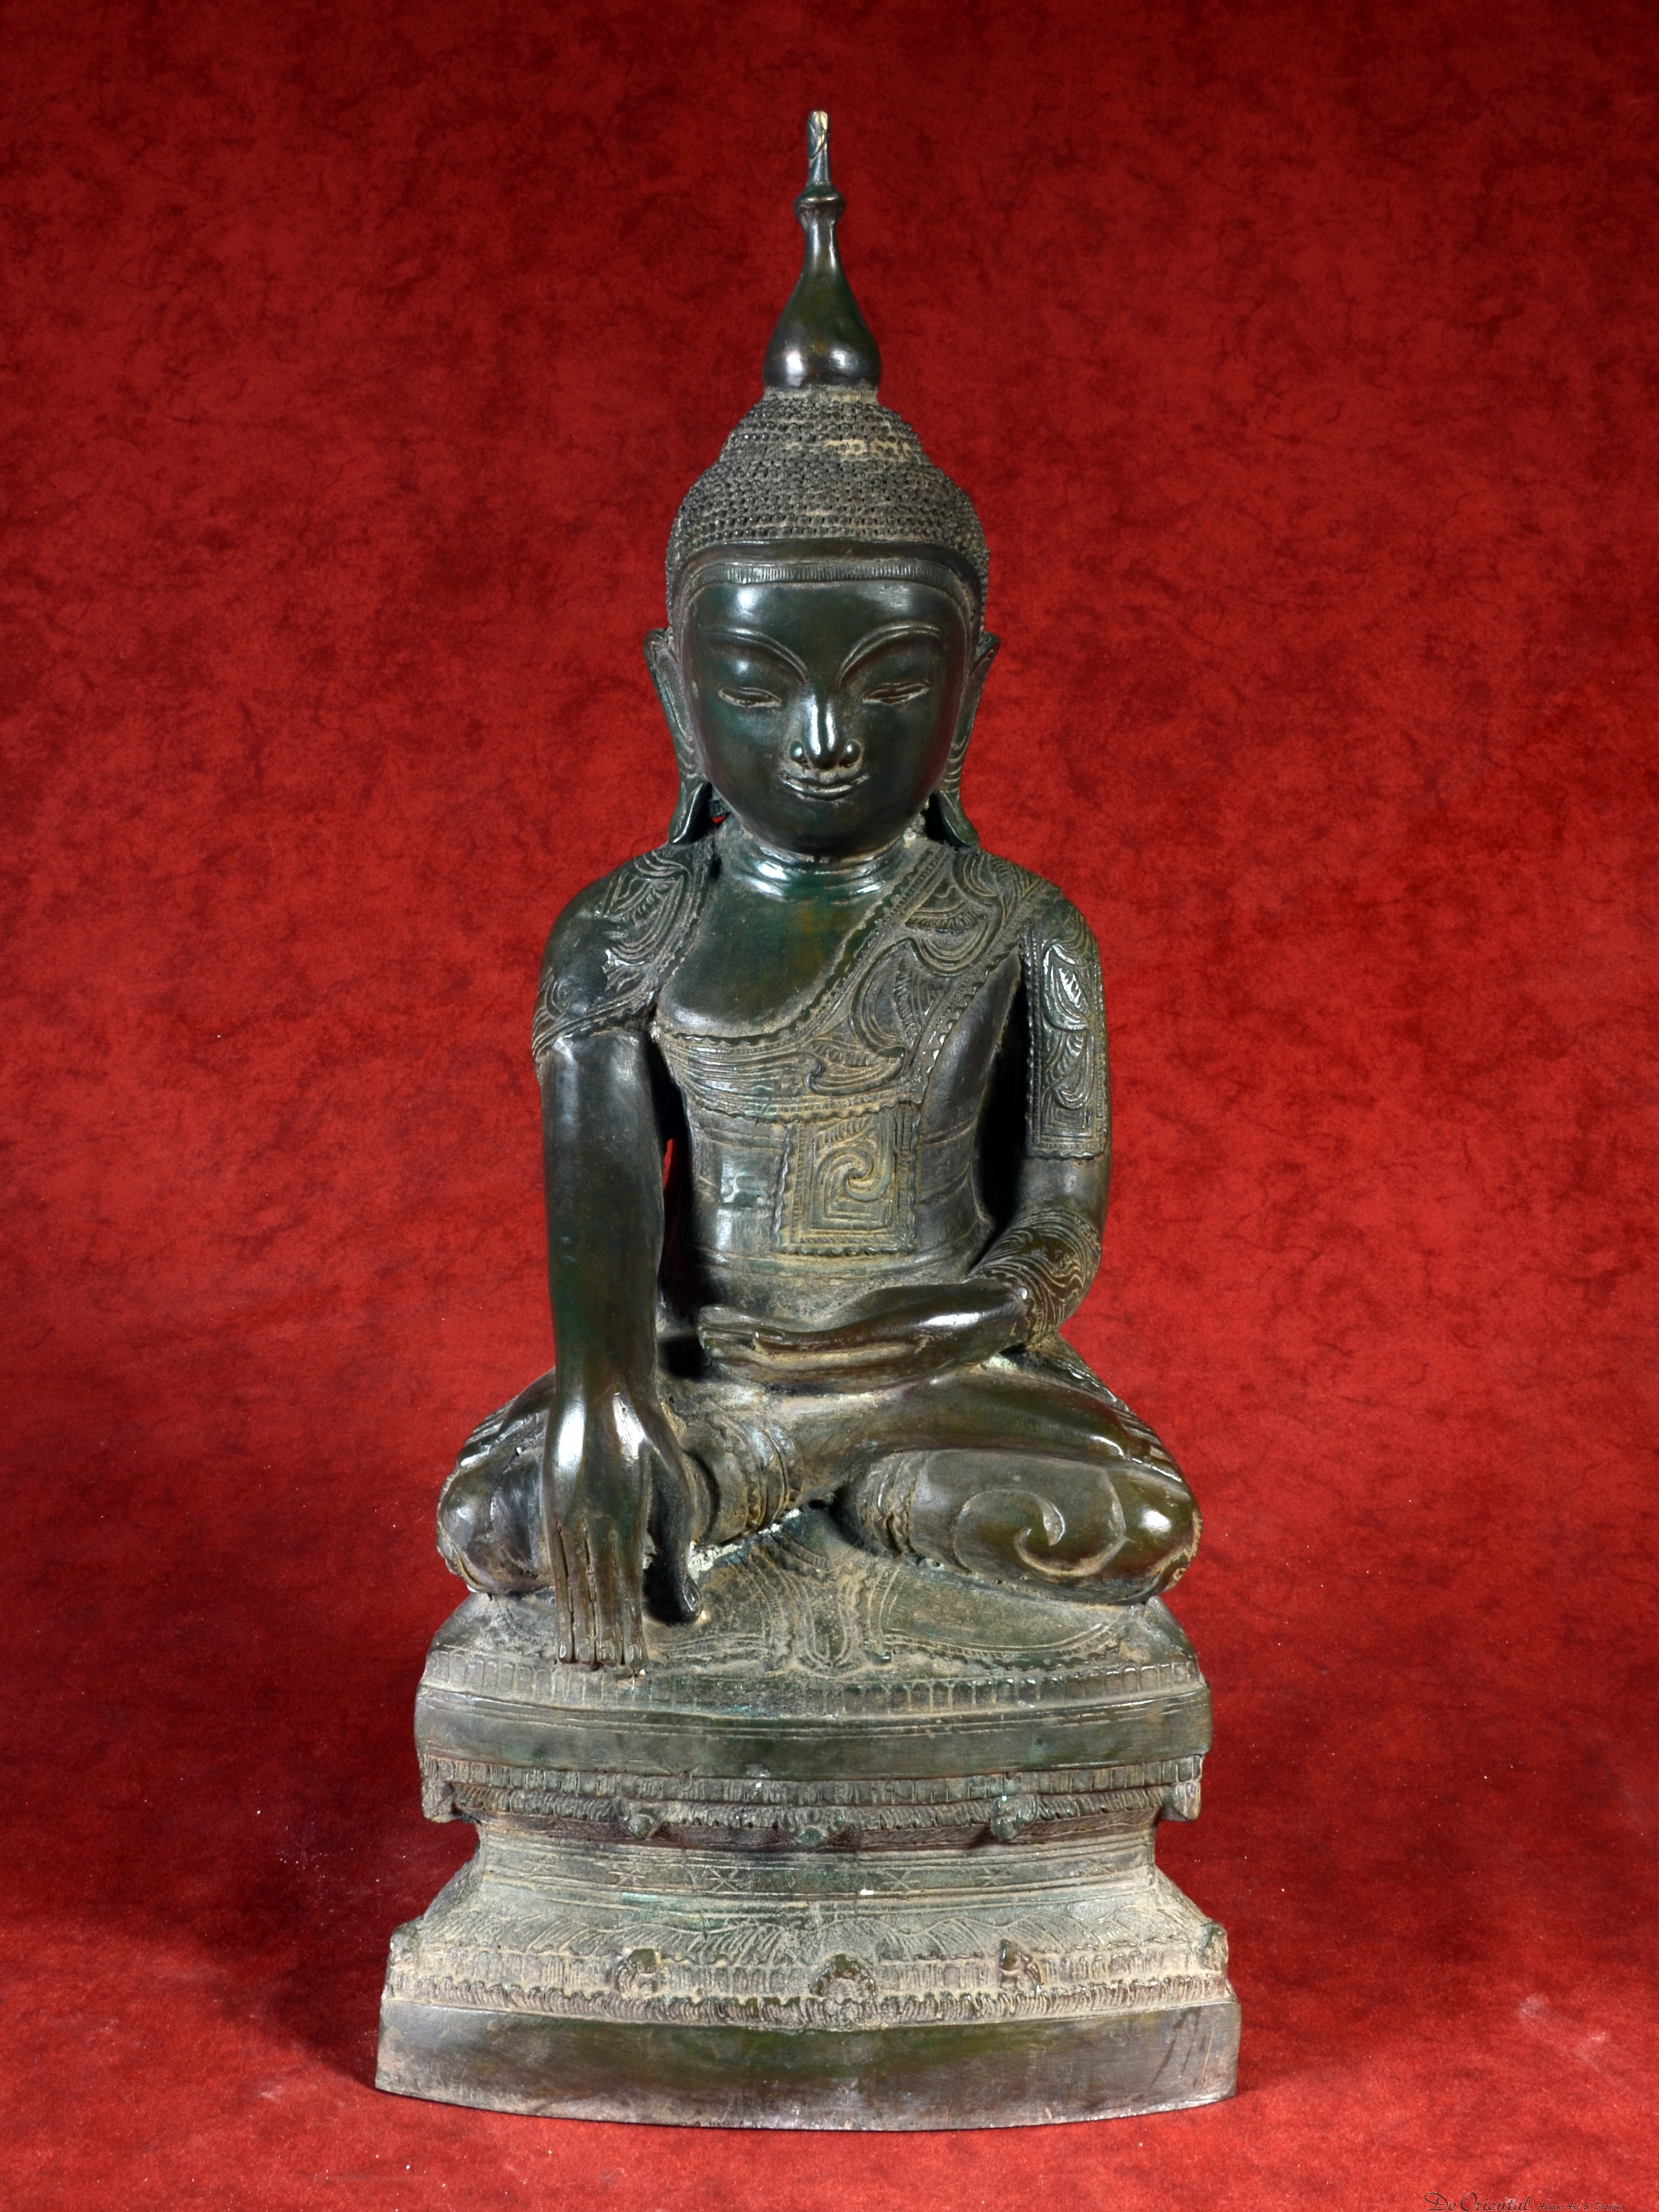 Gewend tweede gek geworden Exclusief groot beeld van een Shan Boeddha in Bhumiparsa mudra | De Oriental